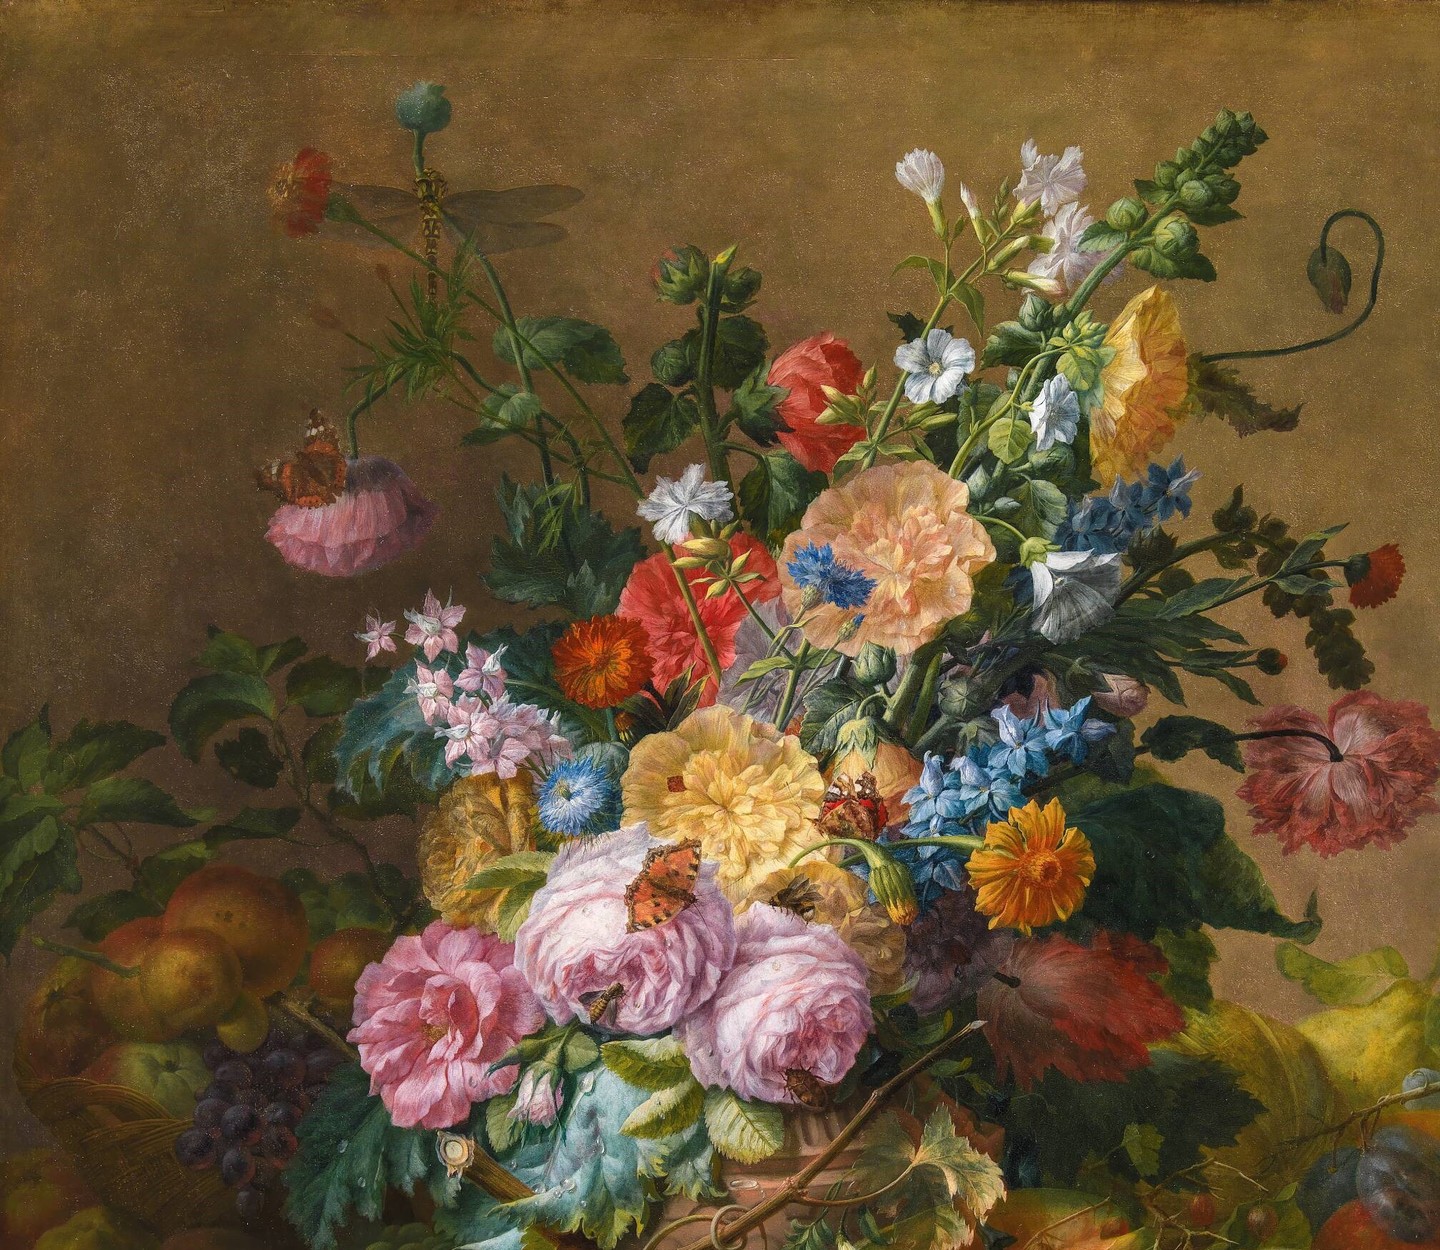 Dominicus Gottfried Waerdigh, "Flowers", 1715-1789, SMK - National Gallery of Denmark